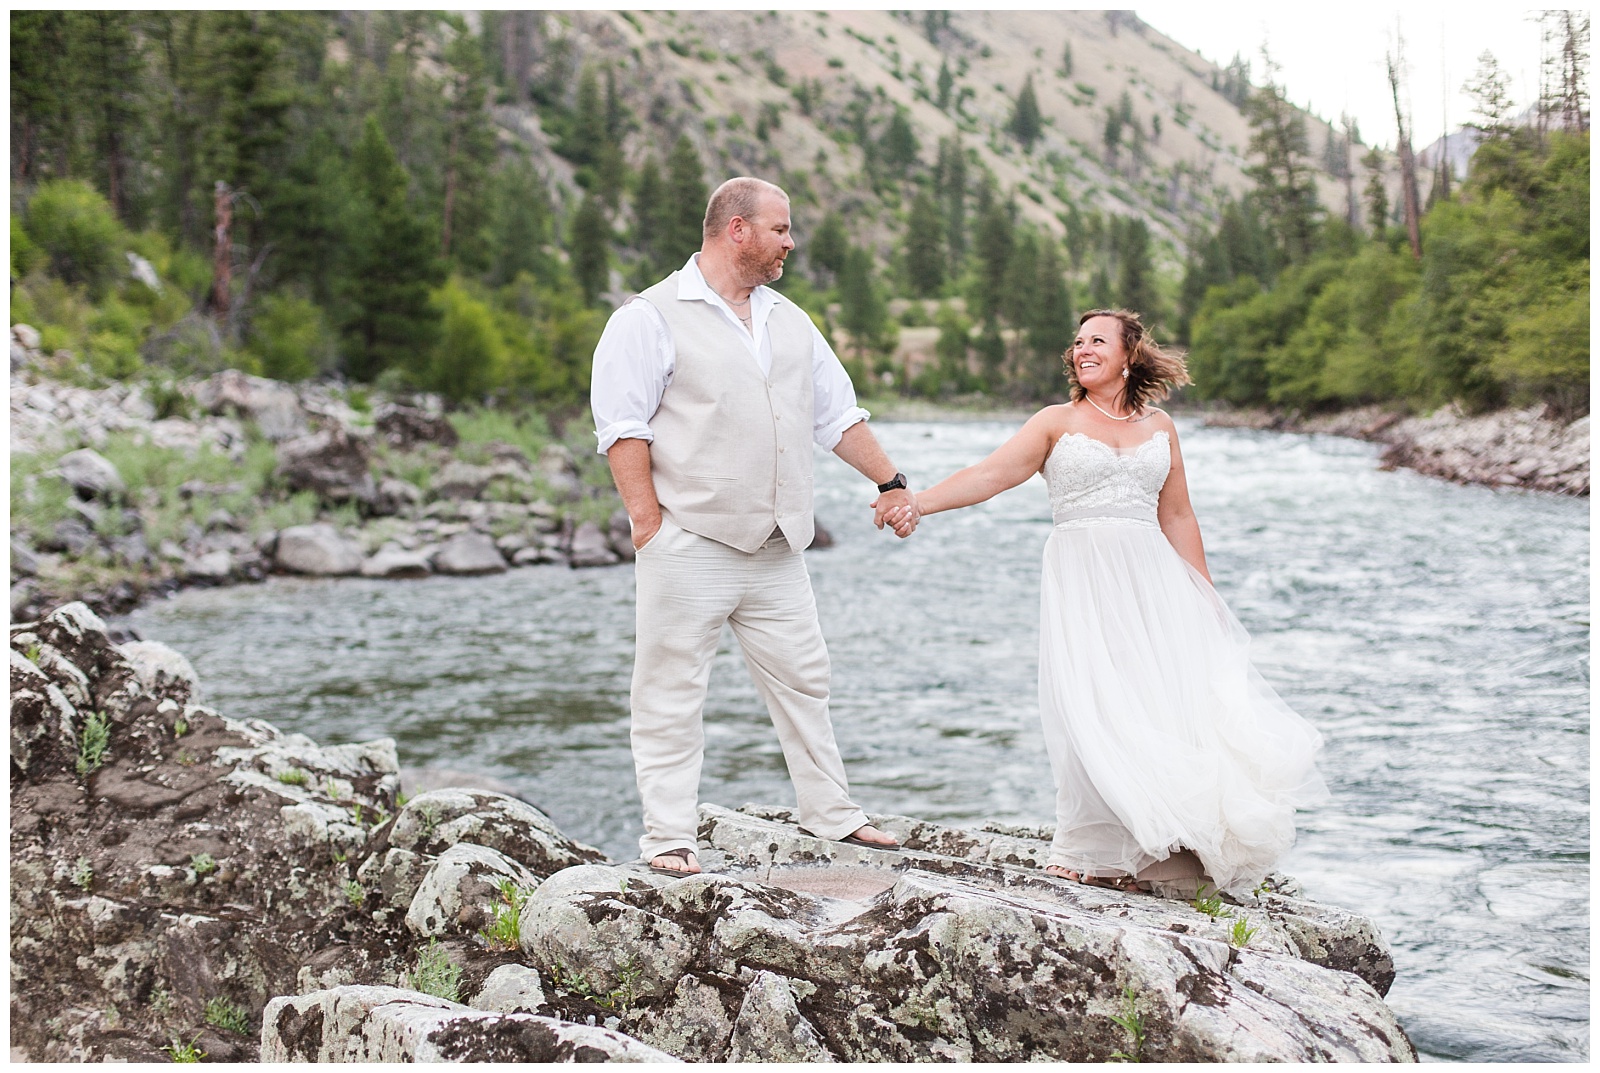 Mackay Bar Ranch, Wedding, Salmon River Wedding, Mountain Wedding